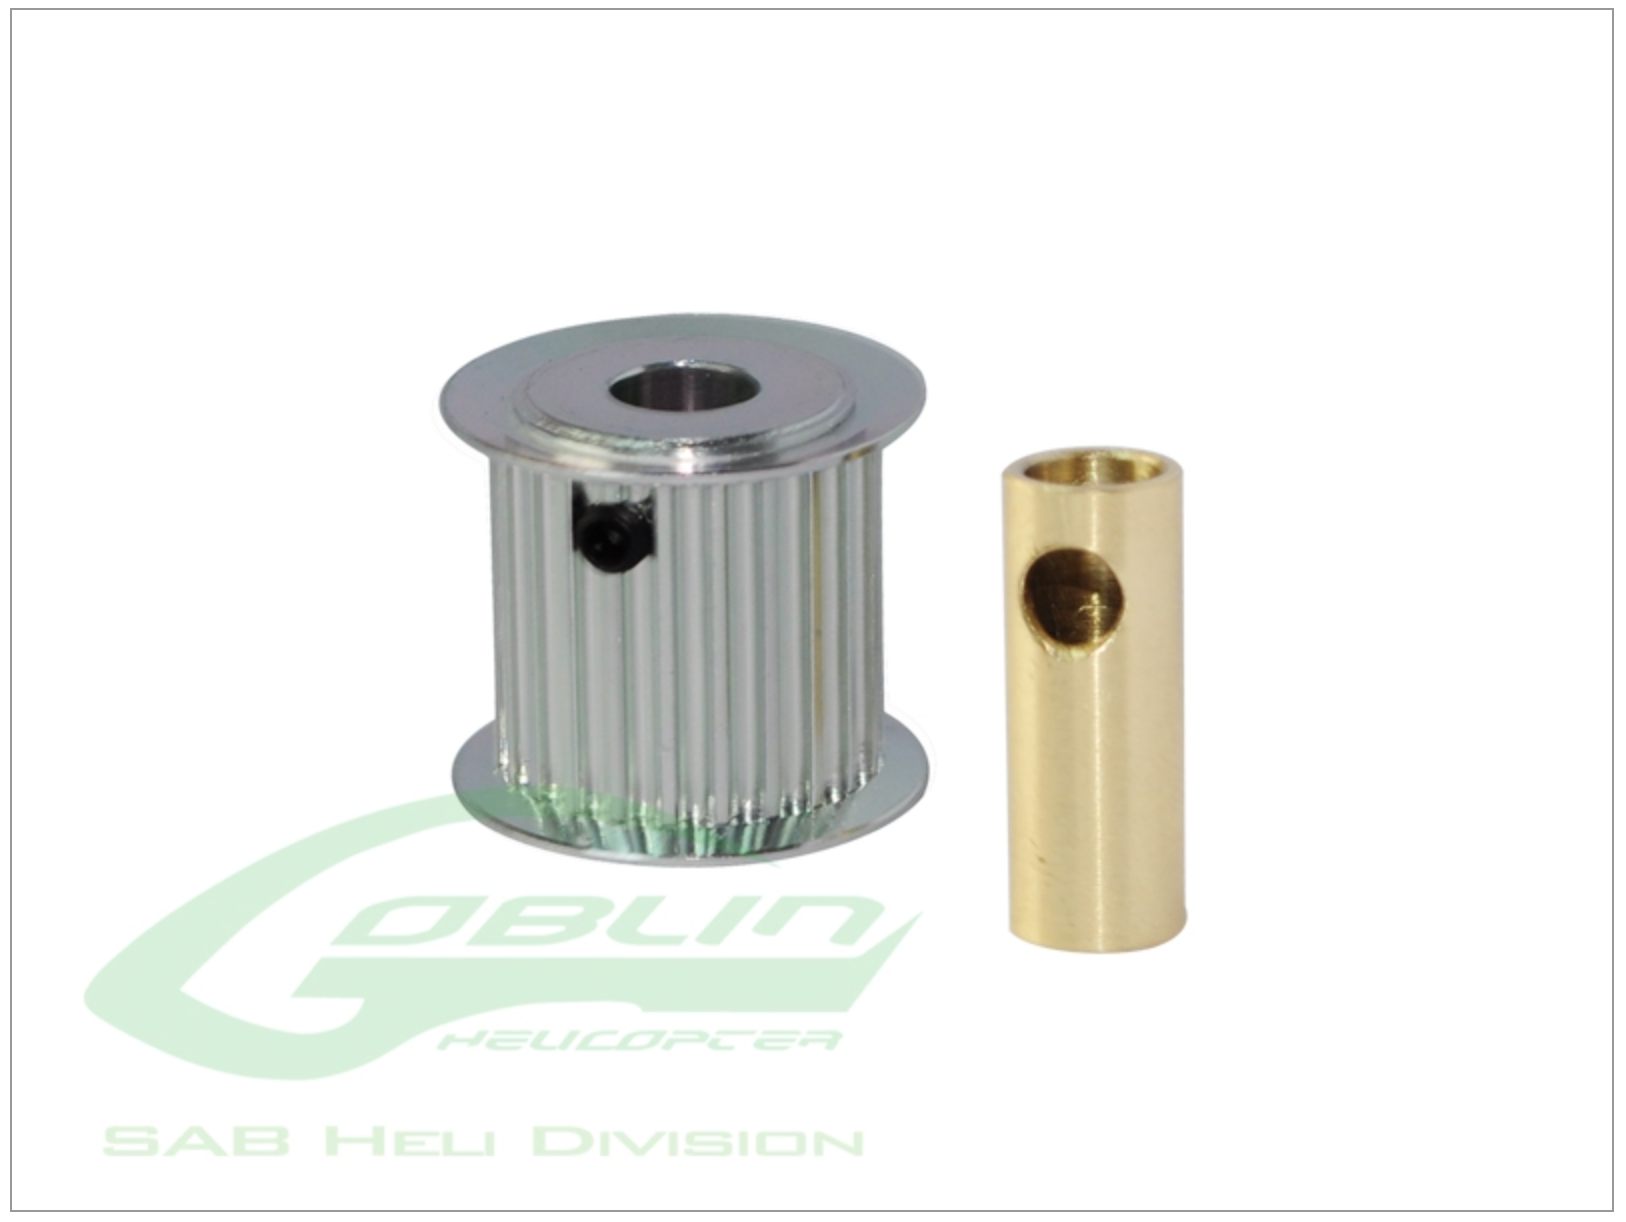 H0175-21-S Aluminum Motor Pulley 21T (for 6/8mm motor shaft)